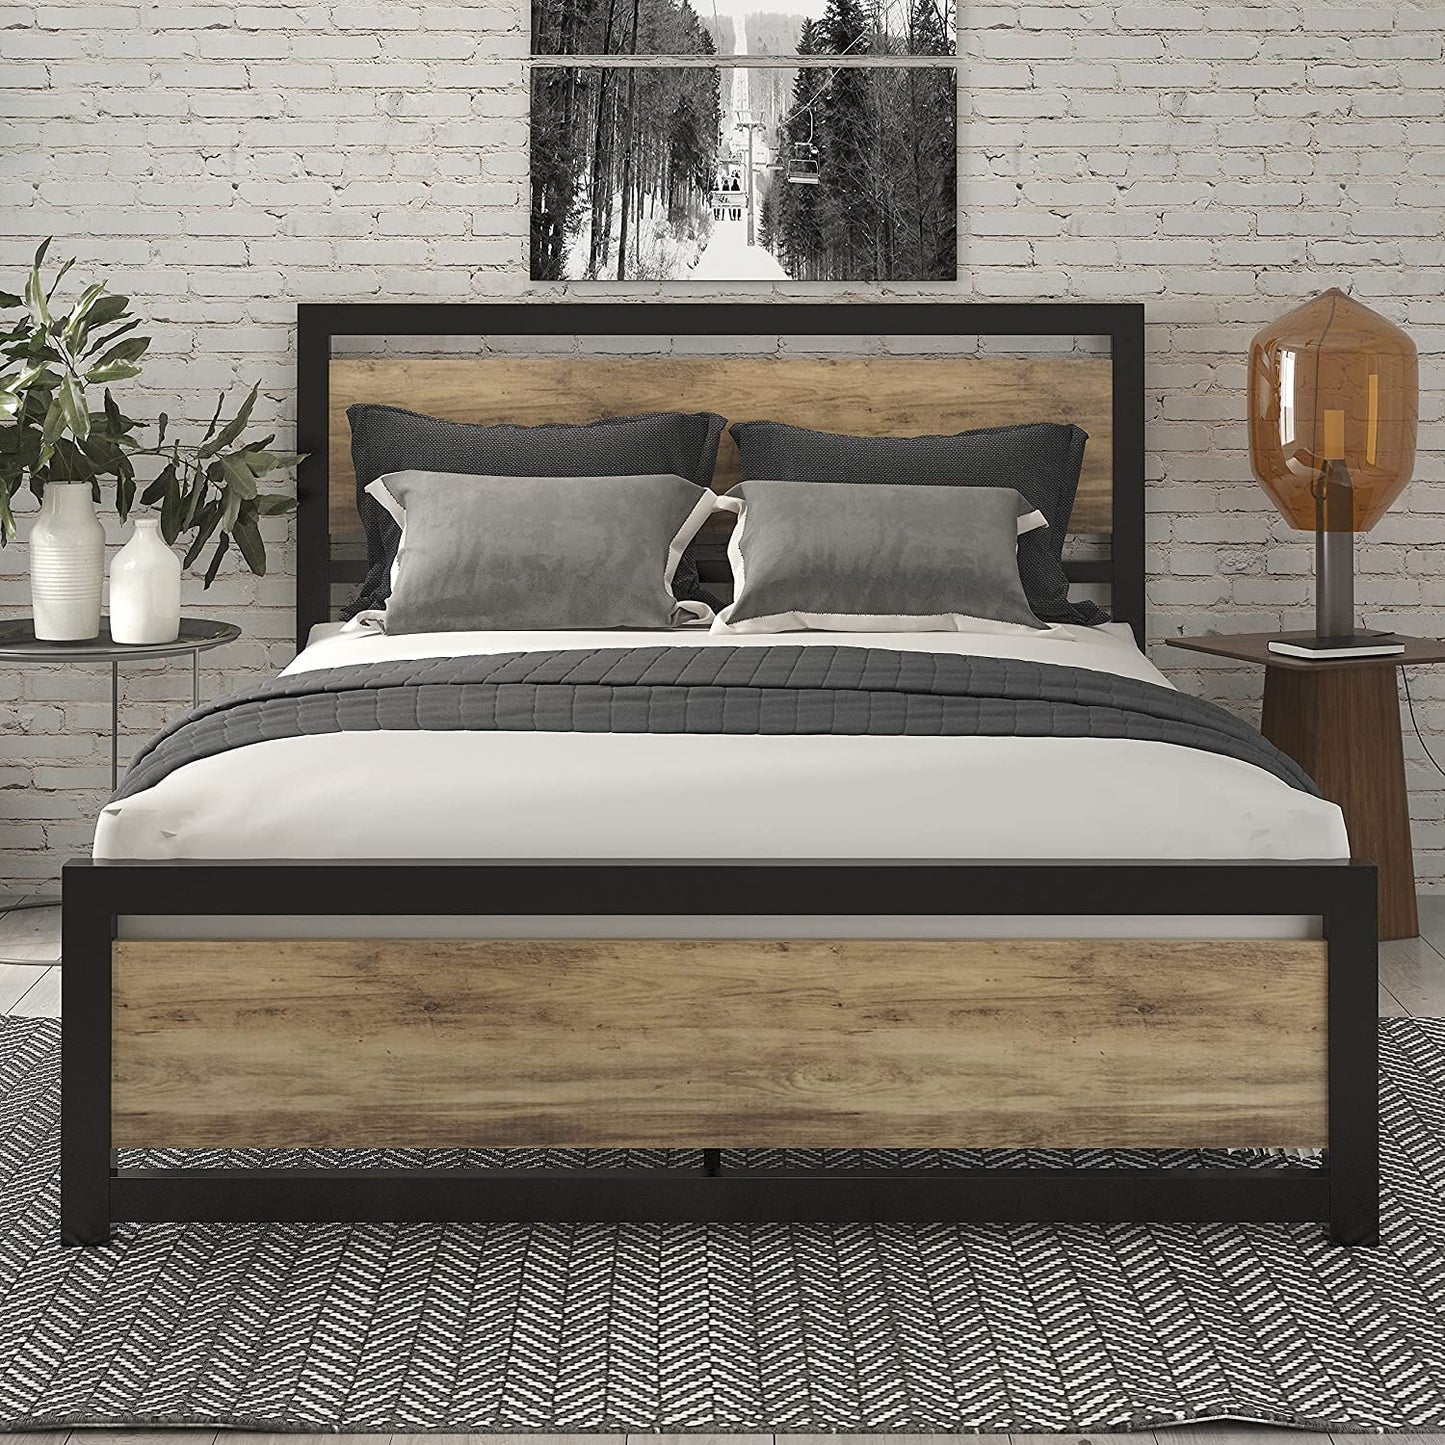 Bowzar Bed Frame with Modern Wooden Headboard Heavy Duty Platform Metal Bed